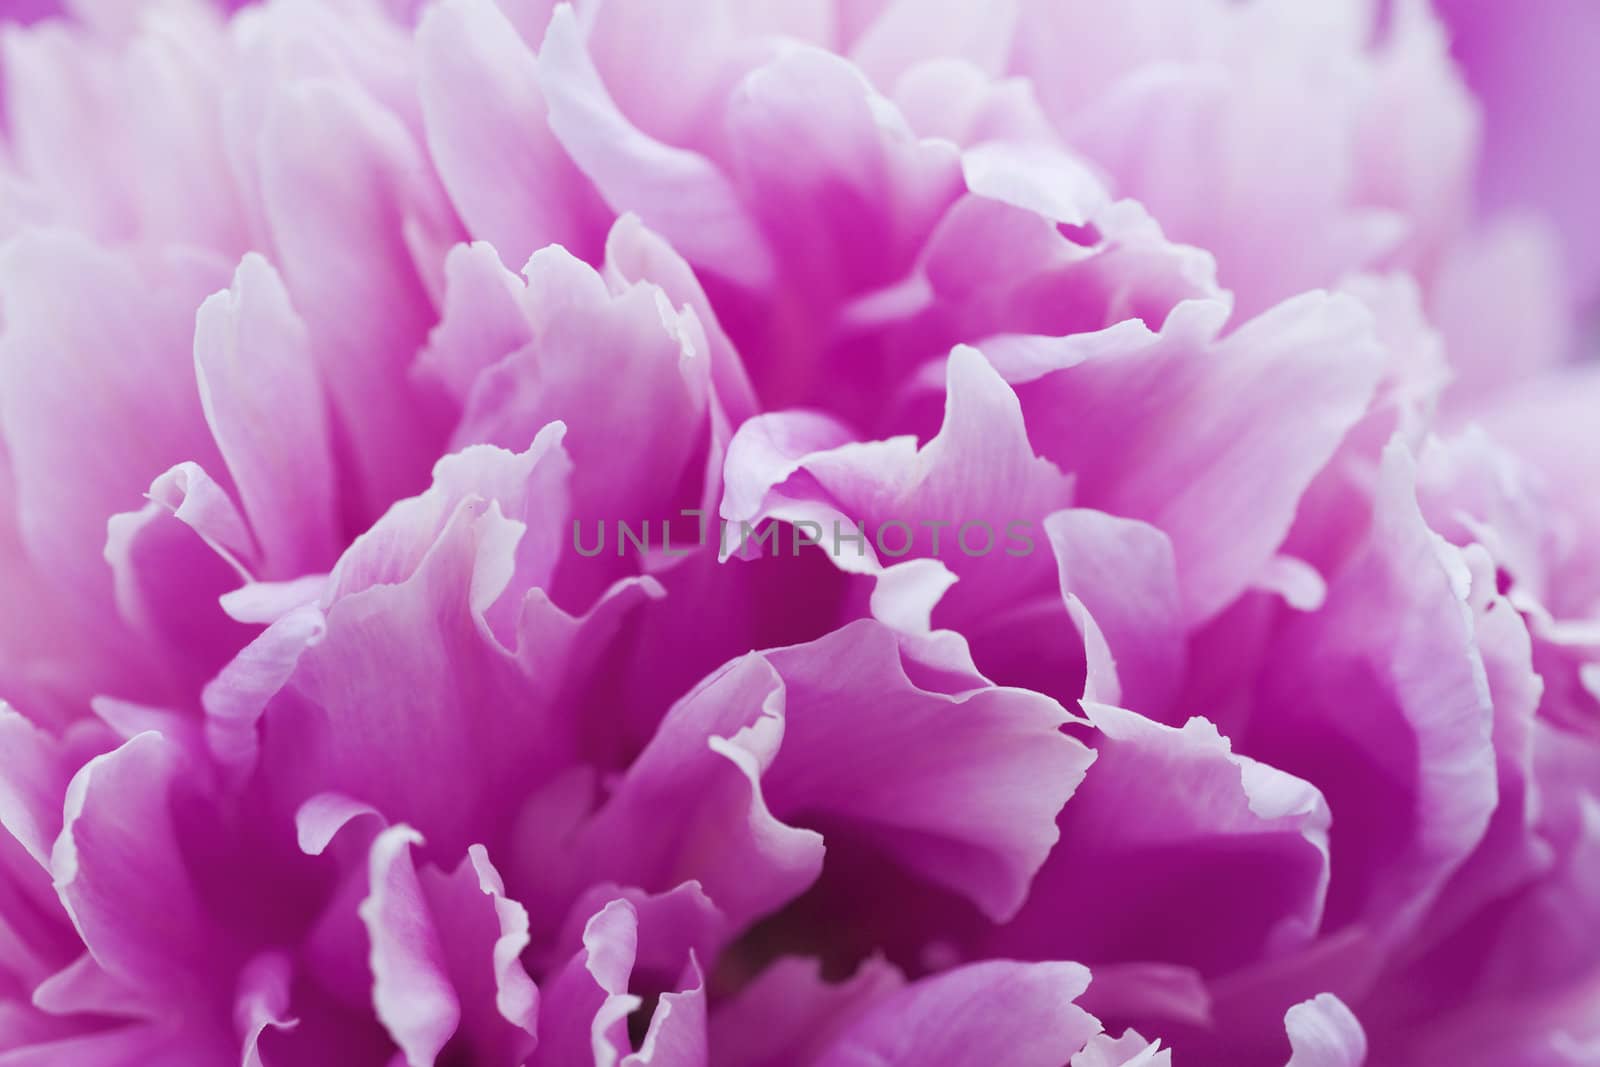 gentle purple petals of summer flower by Serp